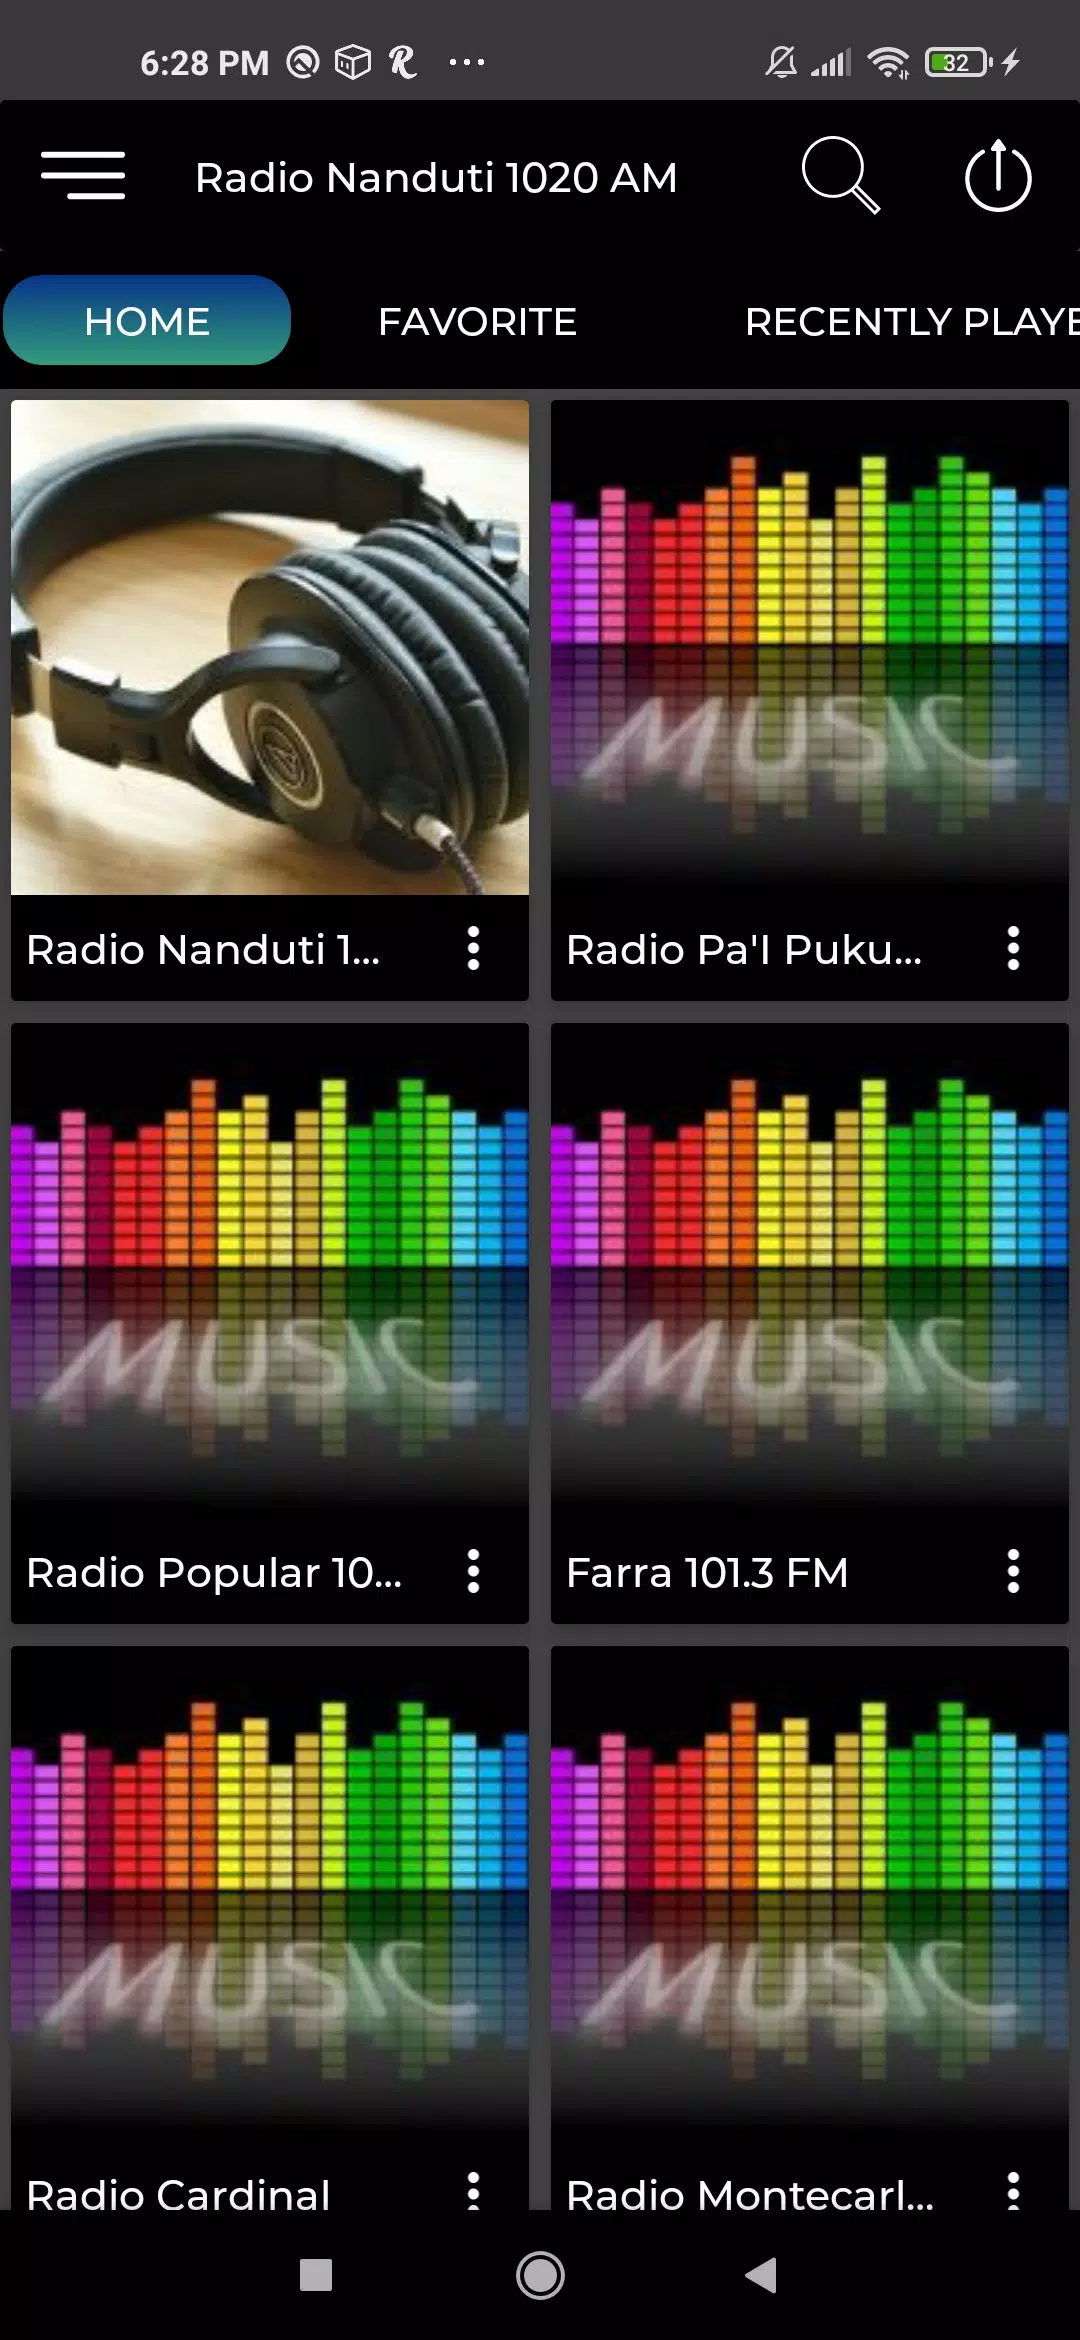 Radio Ñanduti 1020 AM for Android - APK Download